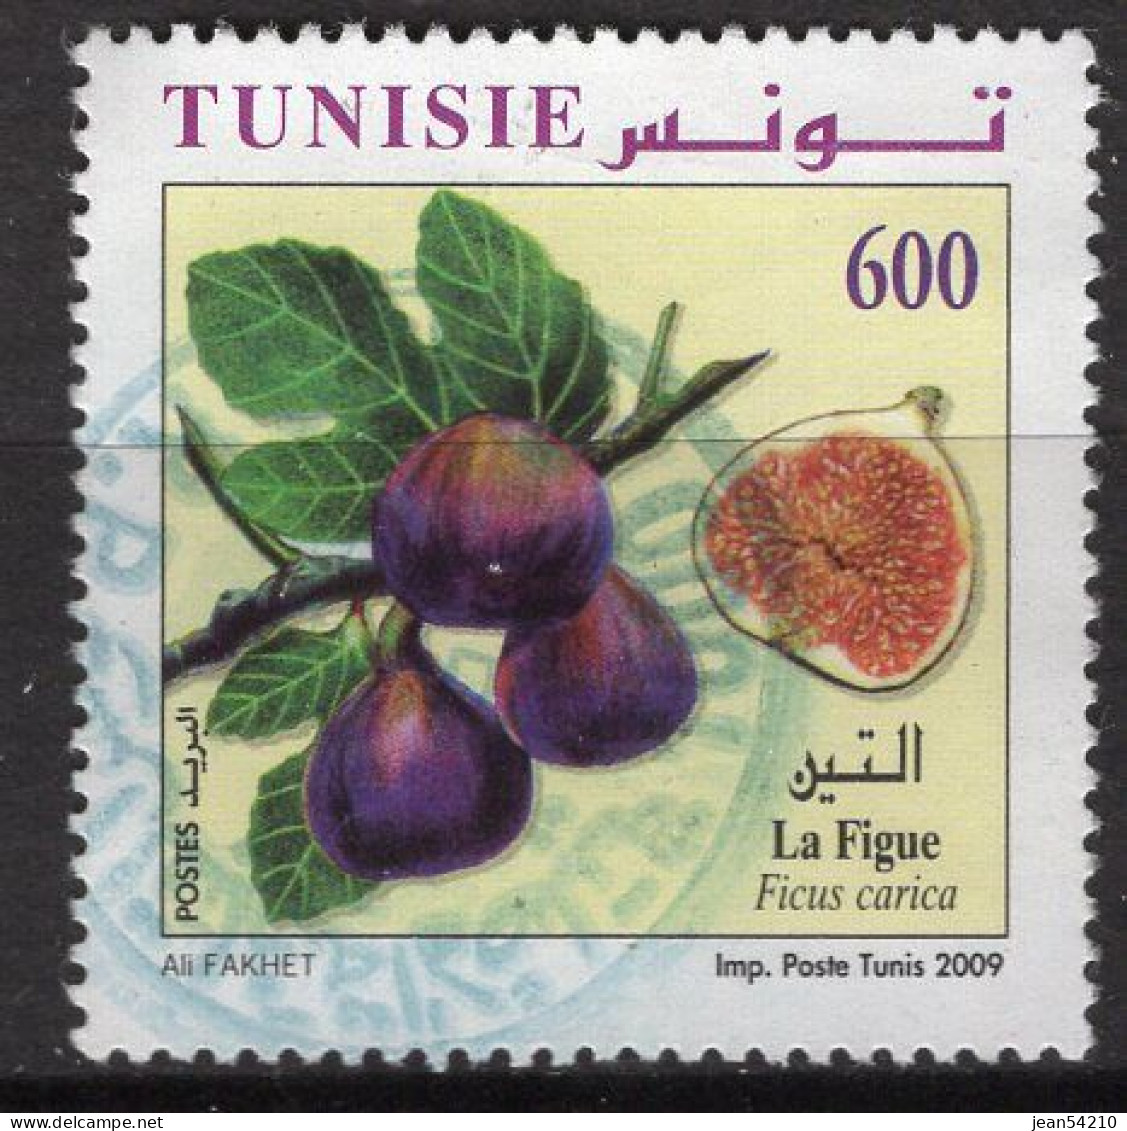 TUNISIE - Timbre N°1641 Oblitéré - Tunisia